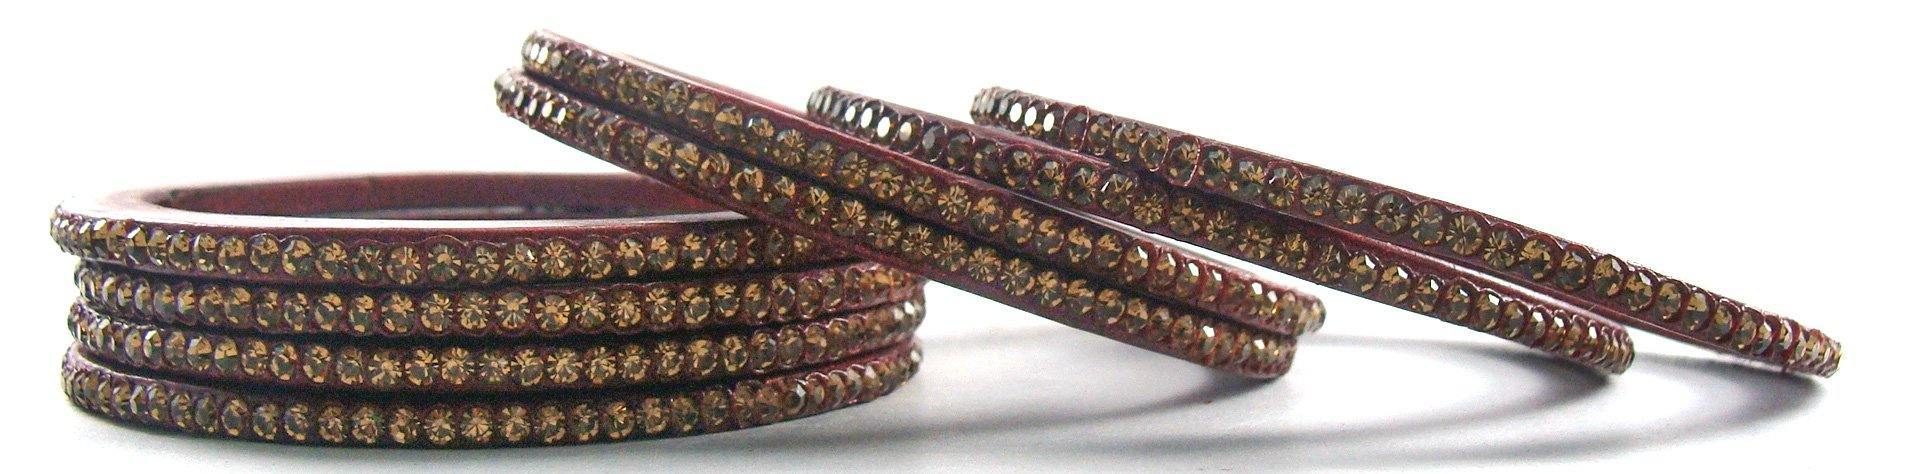 sukriti rajasthani ethnic maroon lac bangles for women - set of 8